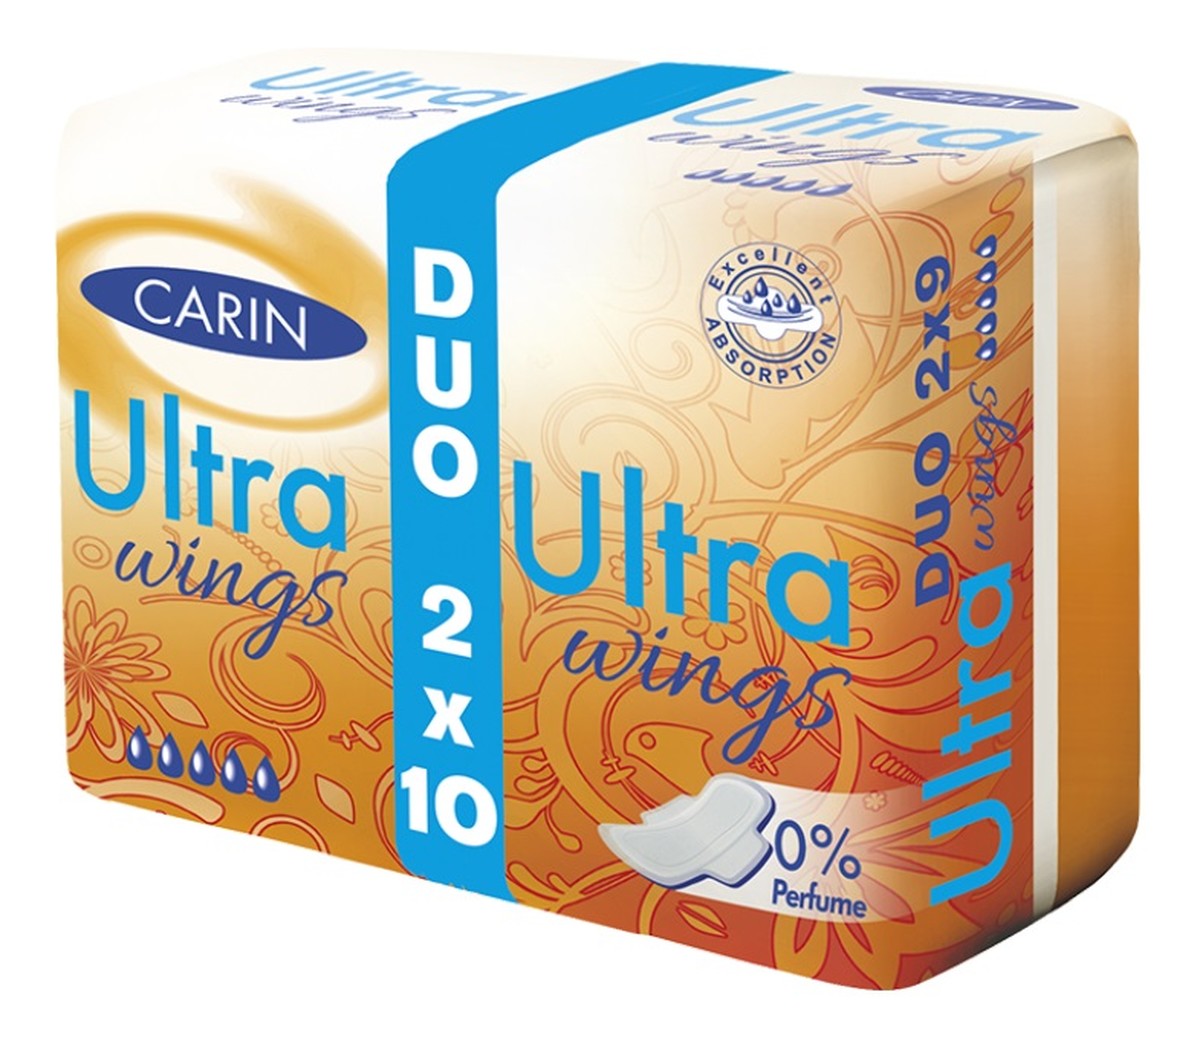 Ultra wings podpaski higieniczne duo pack 2x10szt